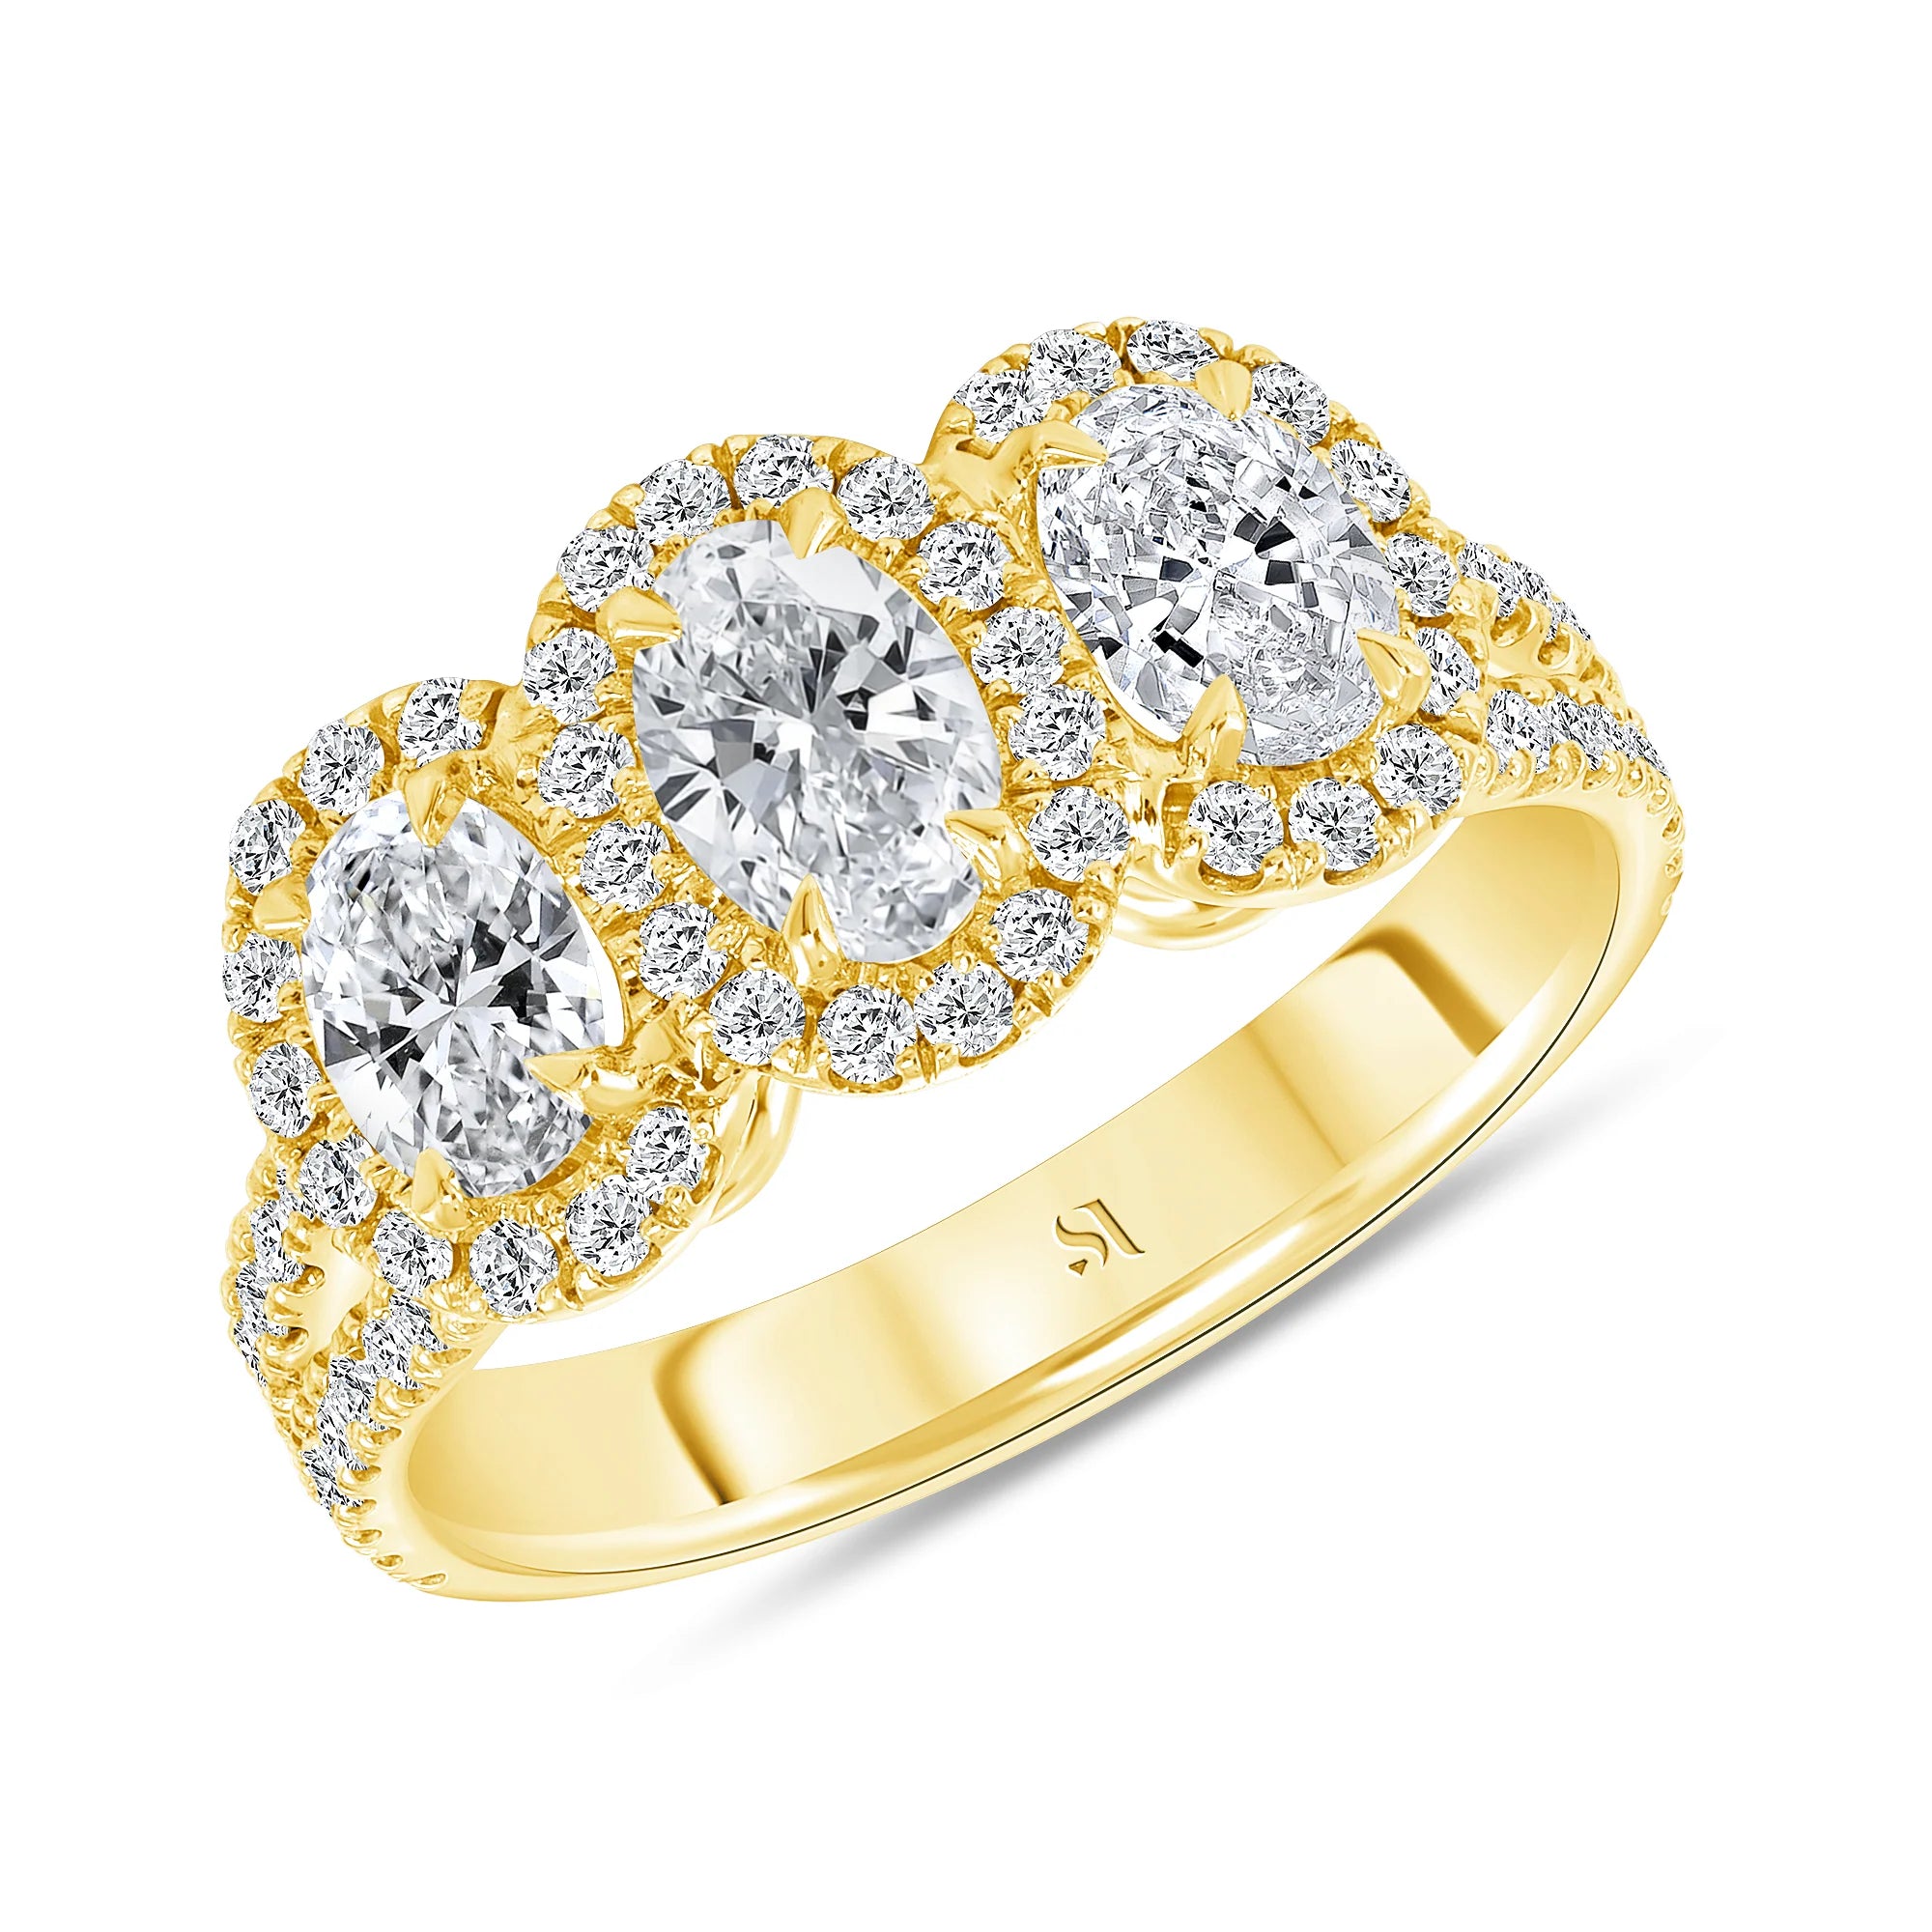 Three-stone engagement ring